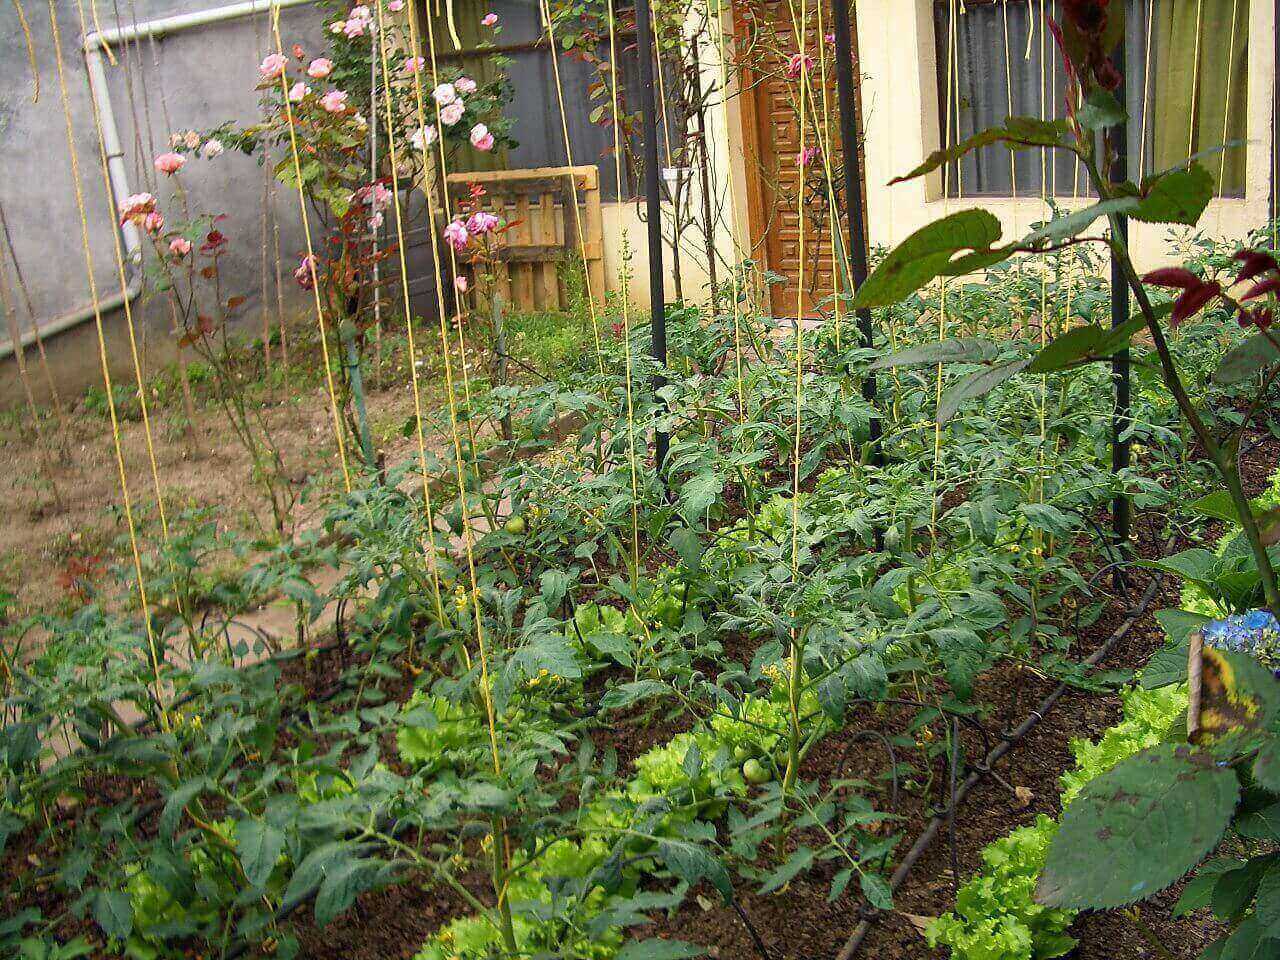 Tips To Grow Healthy Foods Through Backyard Organic Gardening